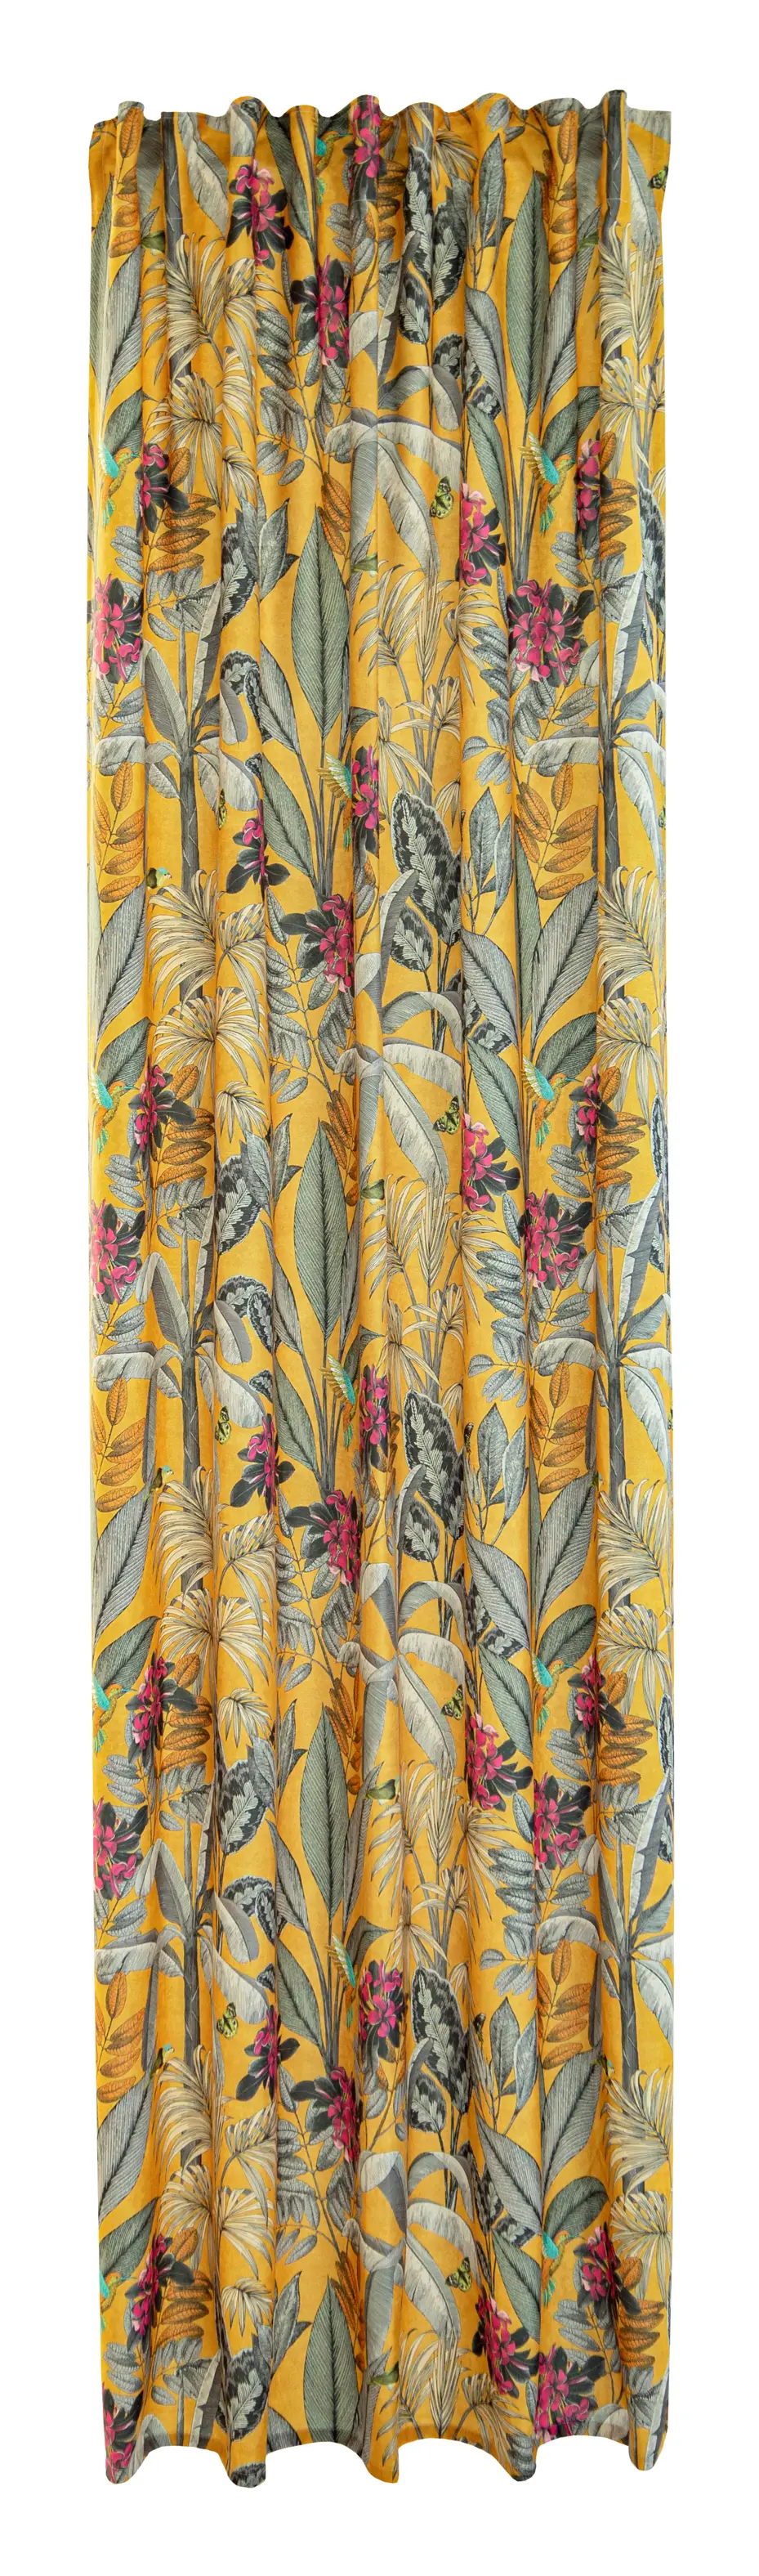 Vorhang gelb floral blickdicht | Vorhänge